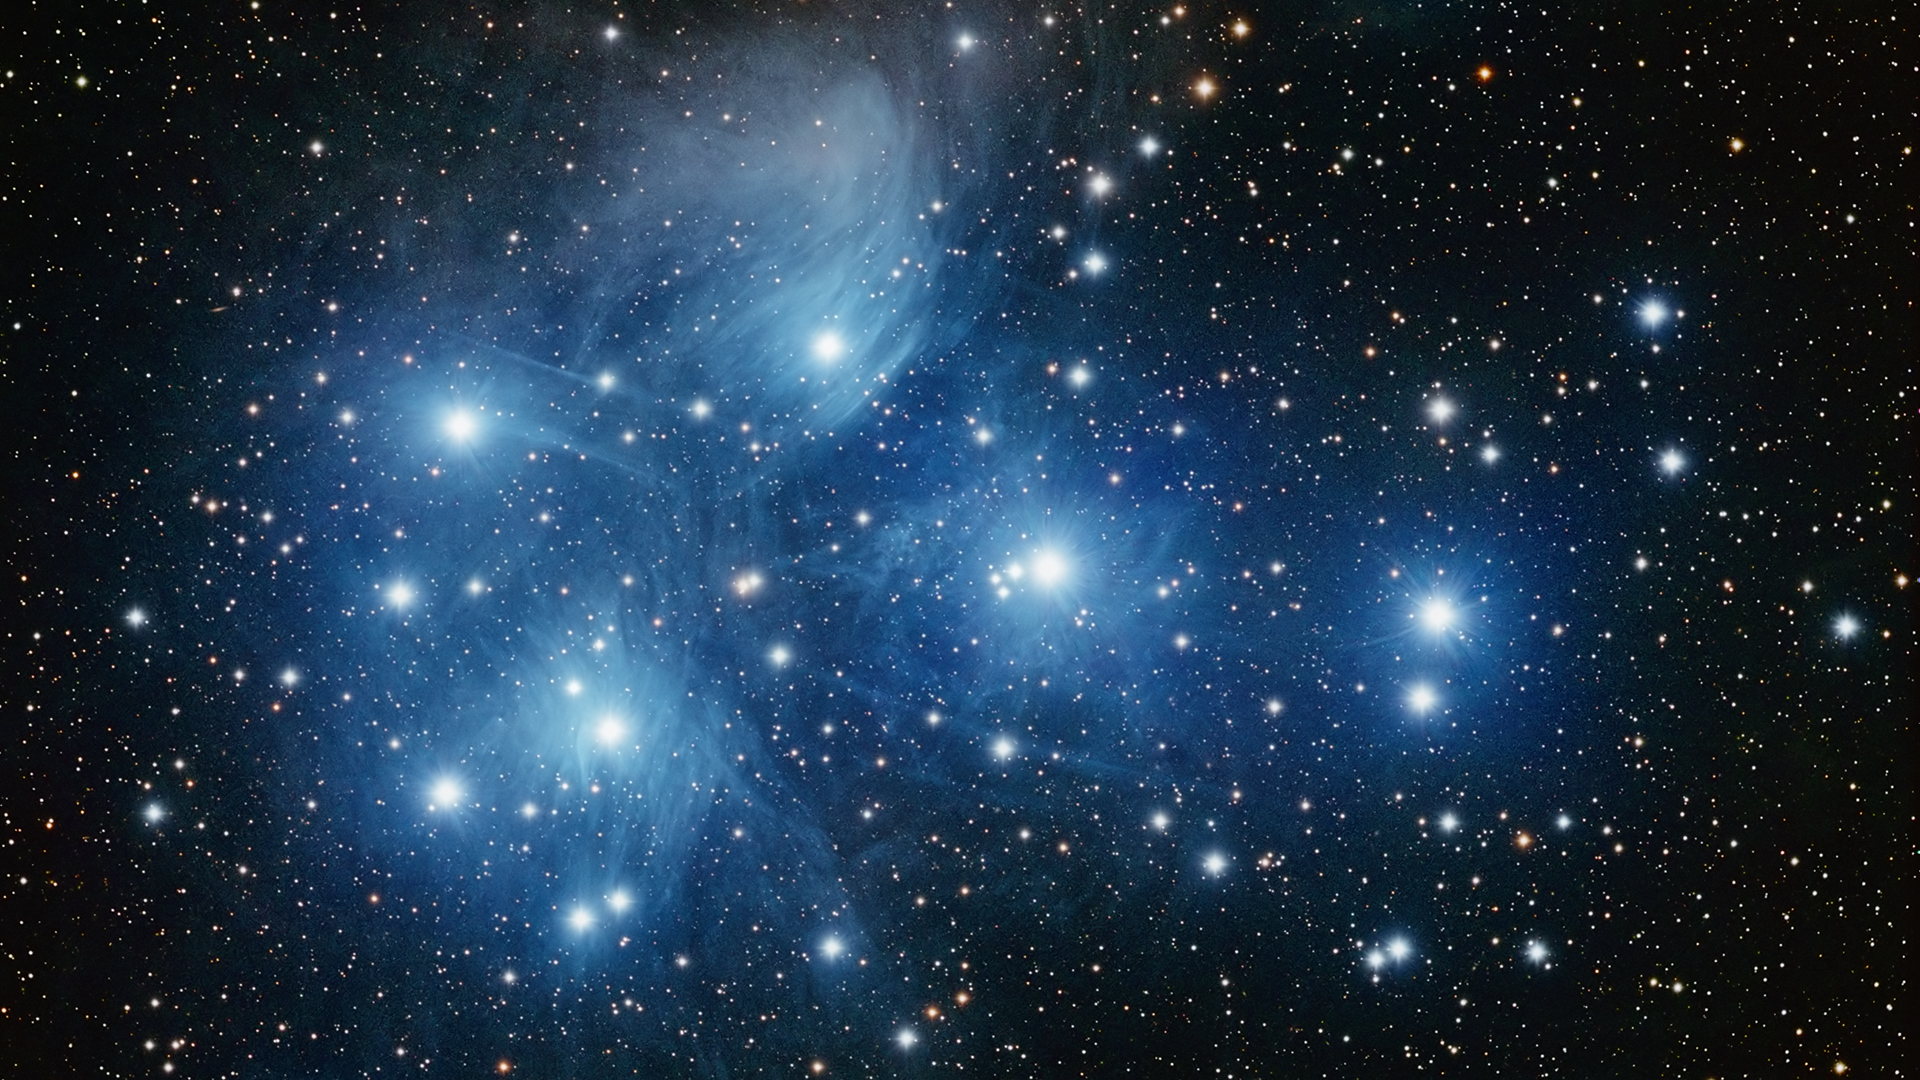 Pleiades M45 Star Cluster